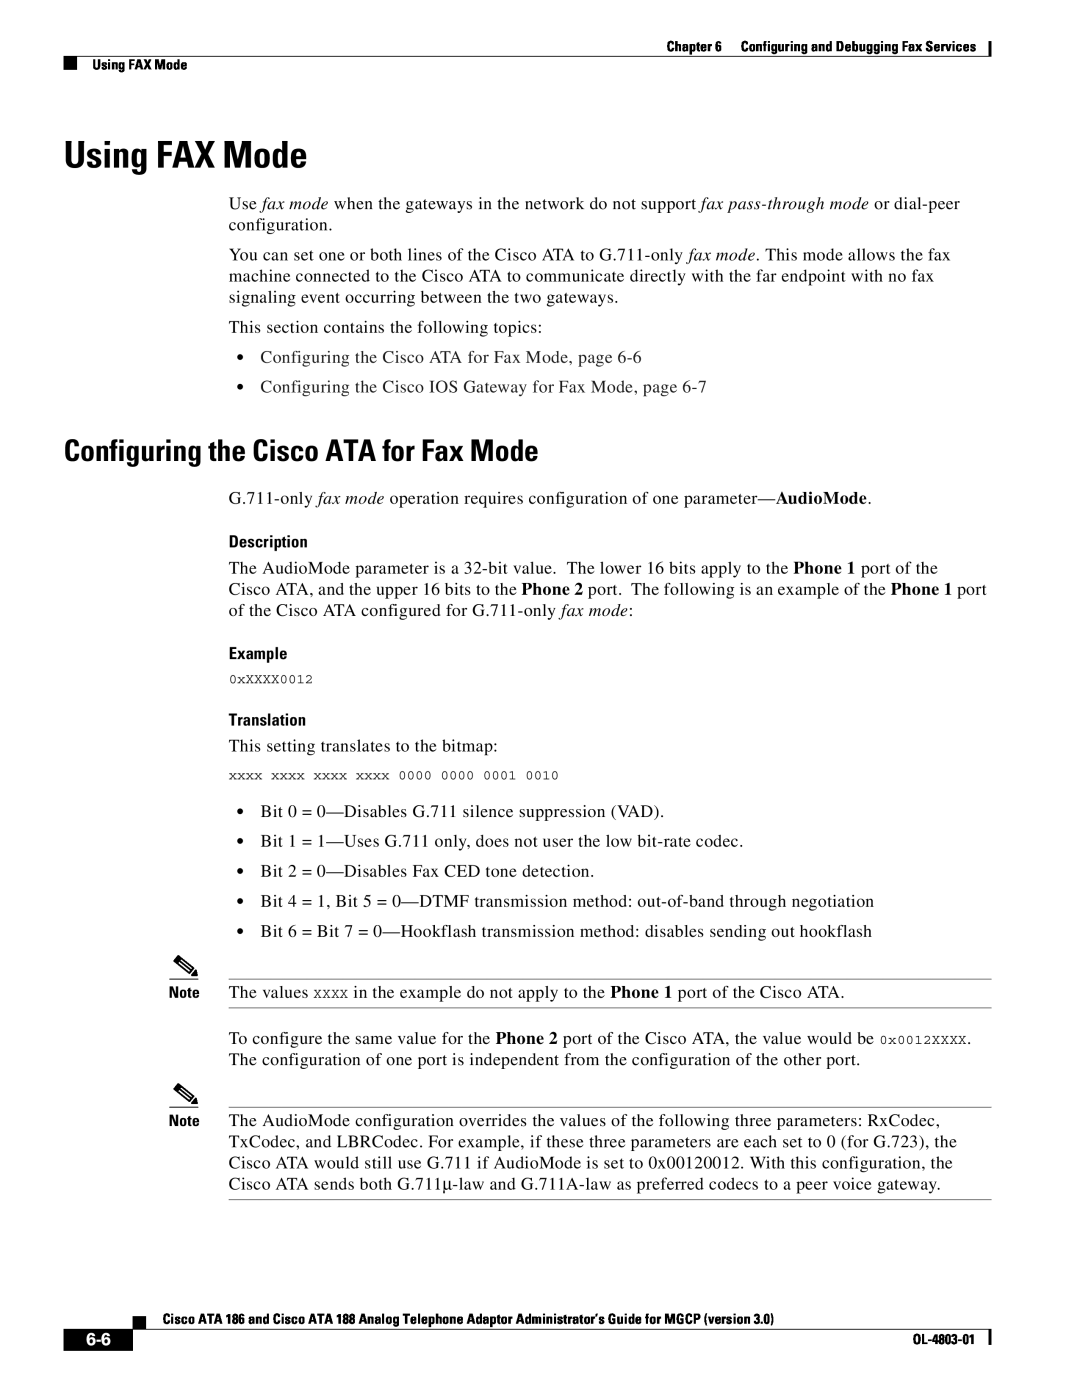 Cisco Systems ATA 186 Using FAX Mode, Configuring the Cisco ATA for Fax Mode, page, Description, Example, Translation 